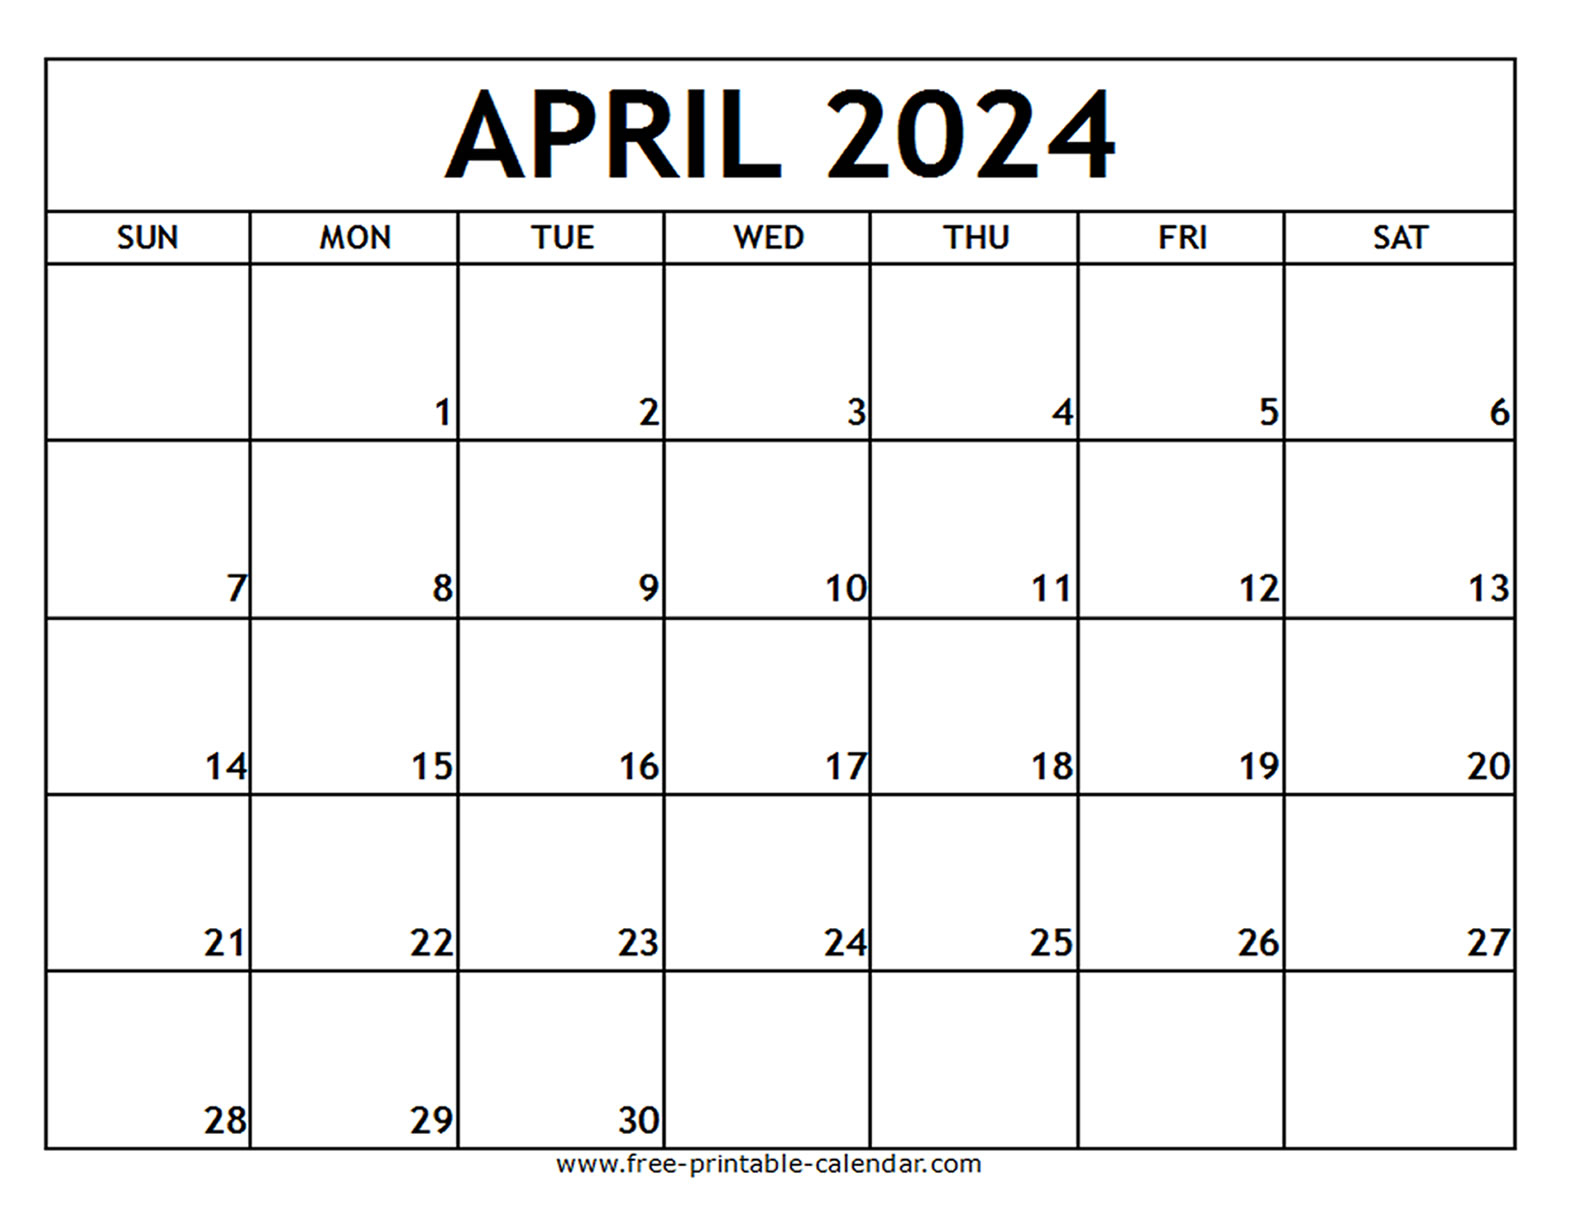 April 2024 Printable Calendar - Free-Printable-Calendar pertaining to April 2024 Printable Calendar Pdf